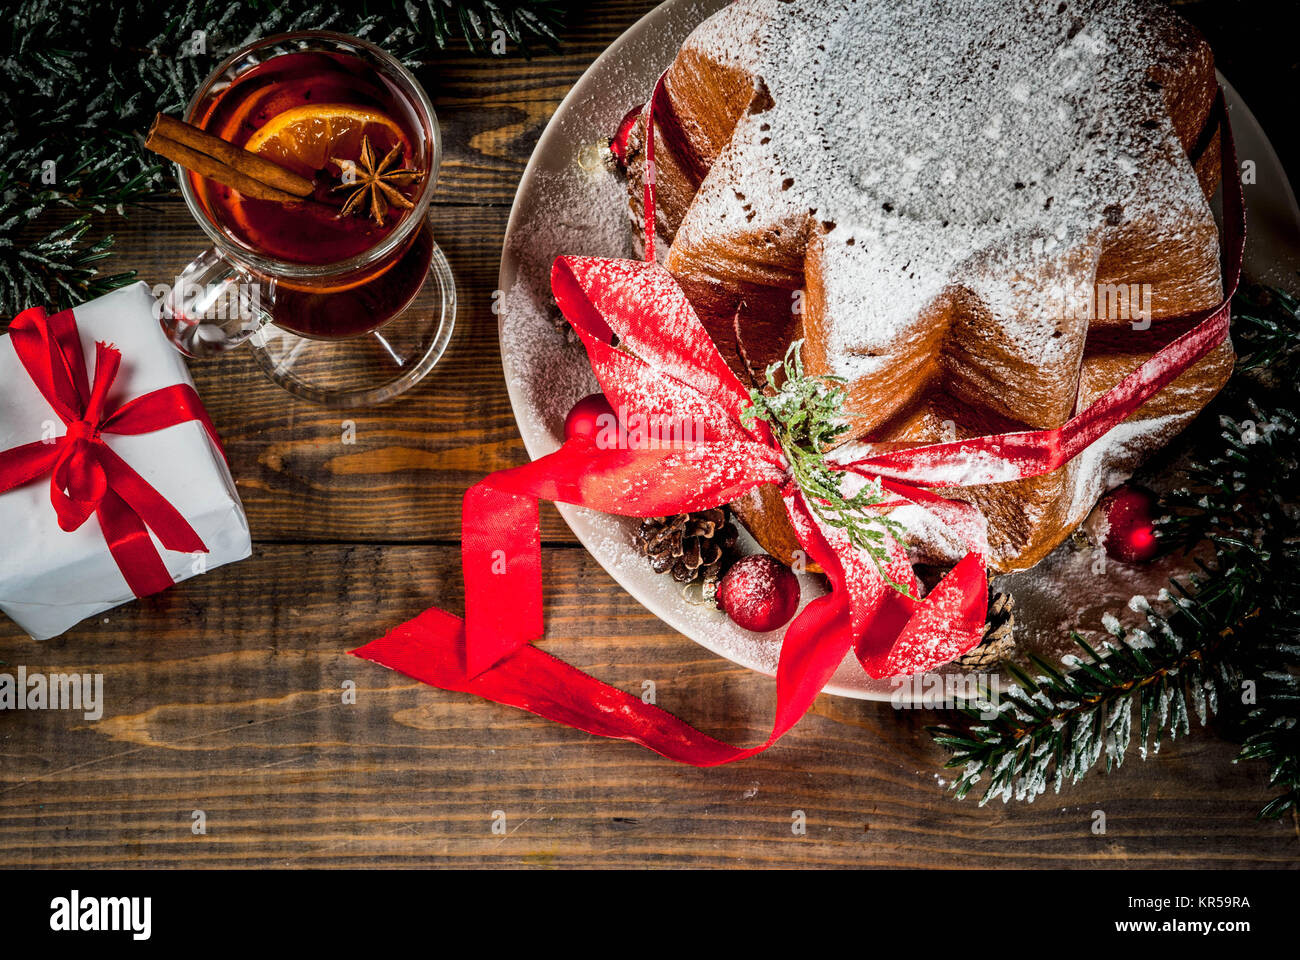 Christmas Cakes: Italian panettone and pandoro